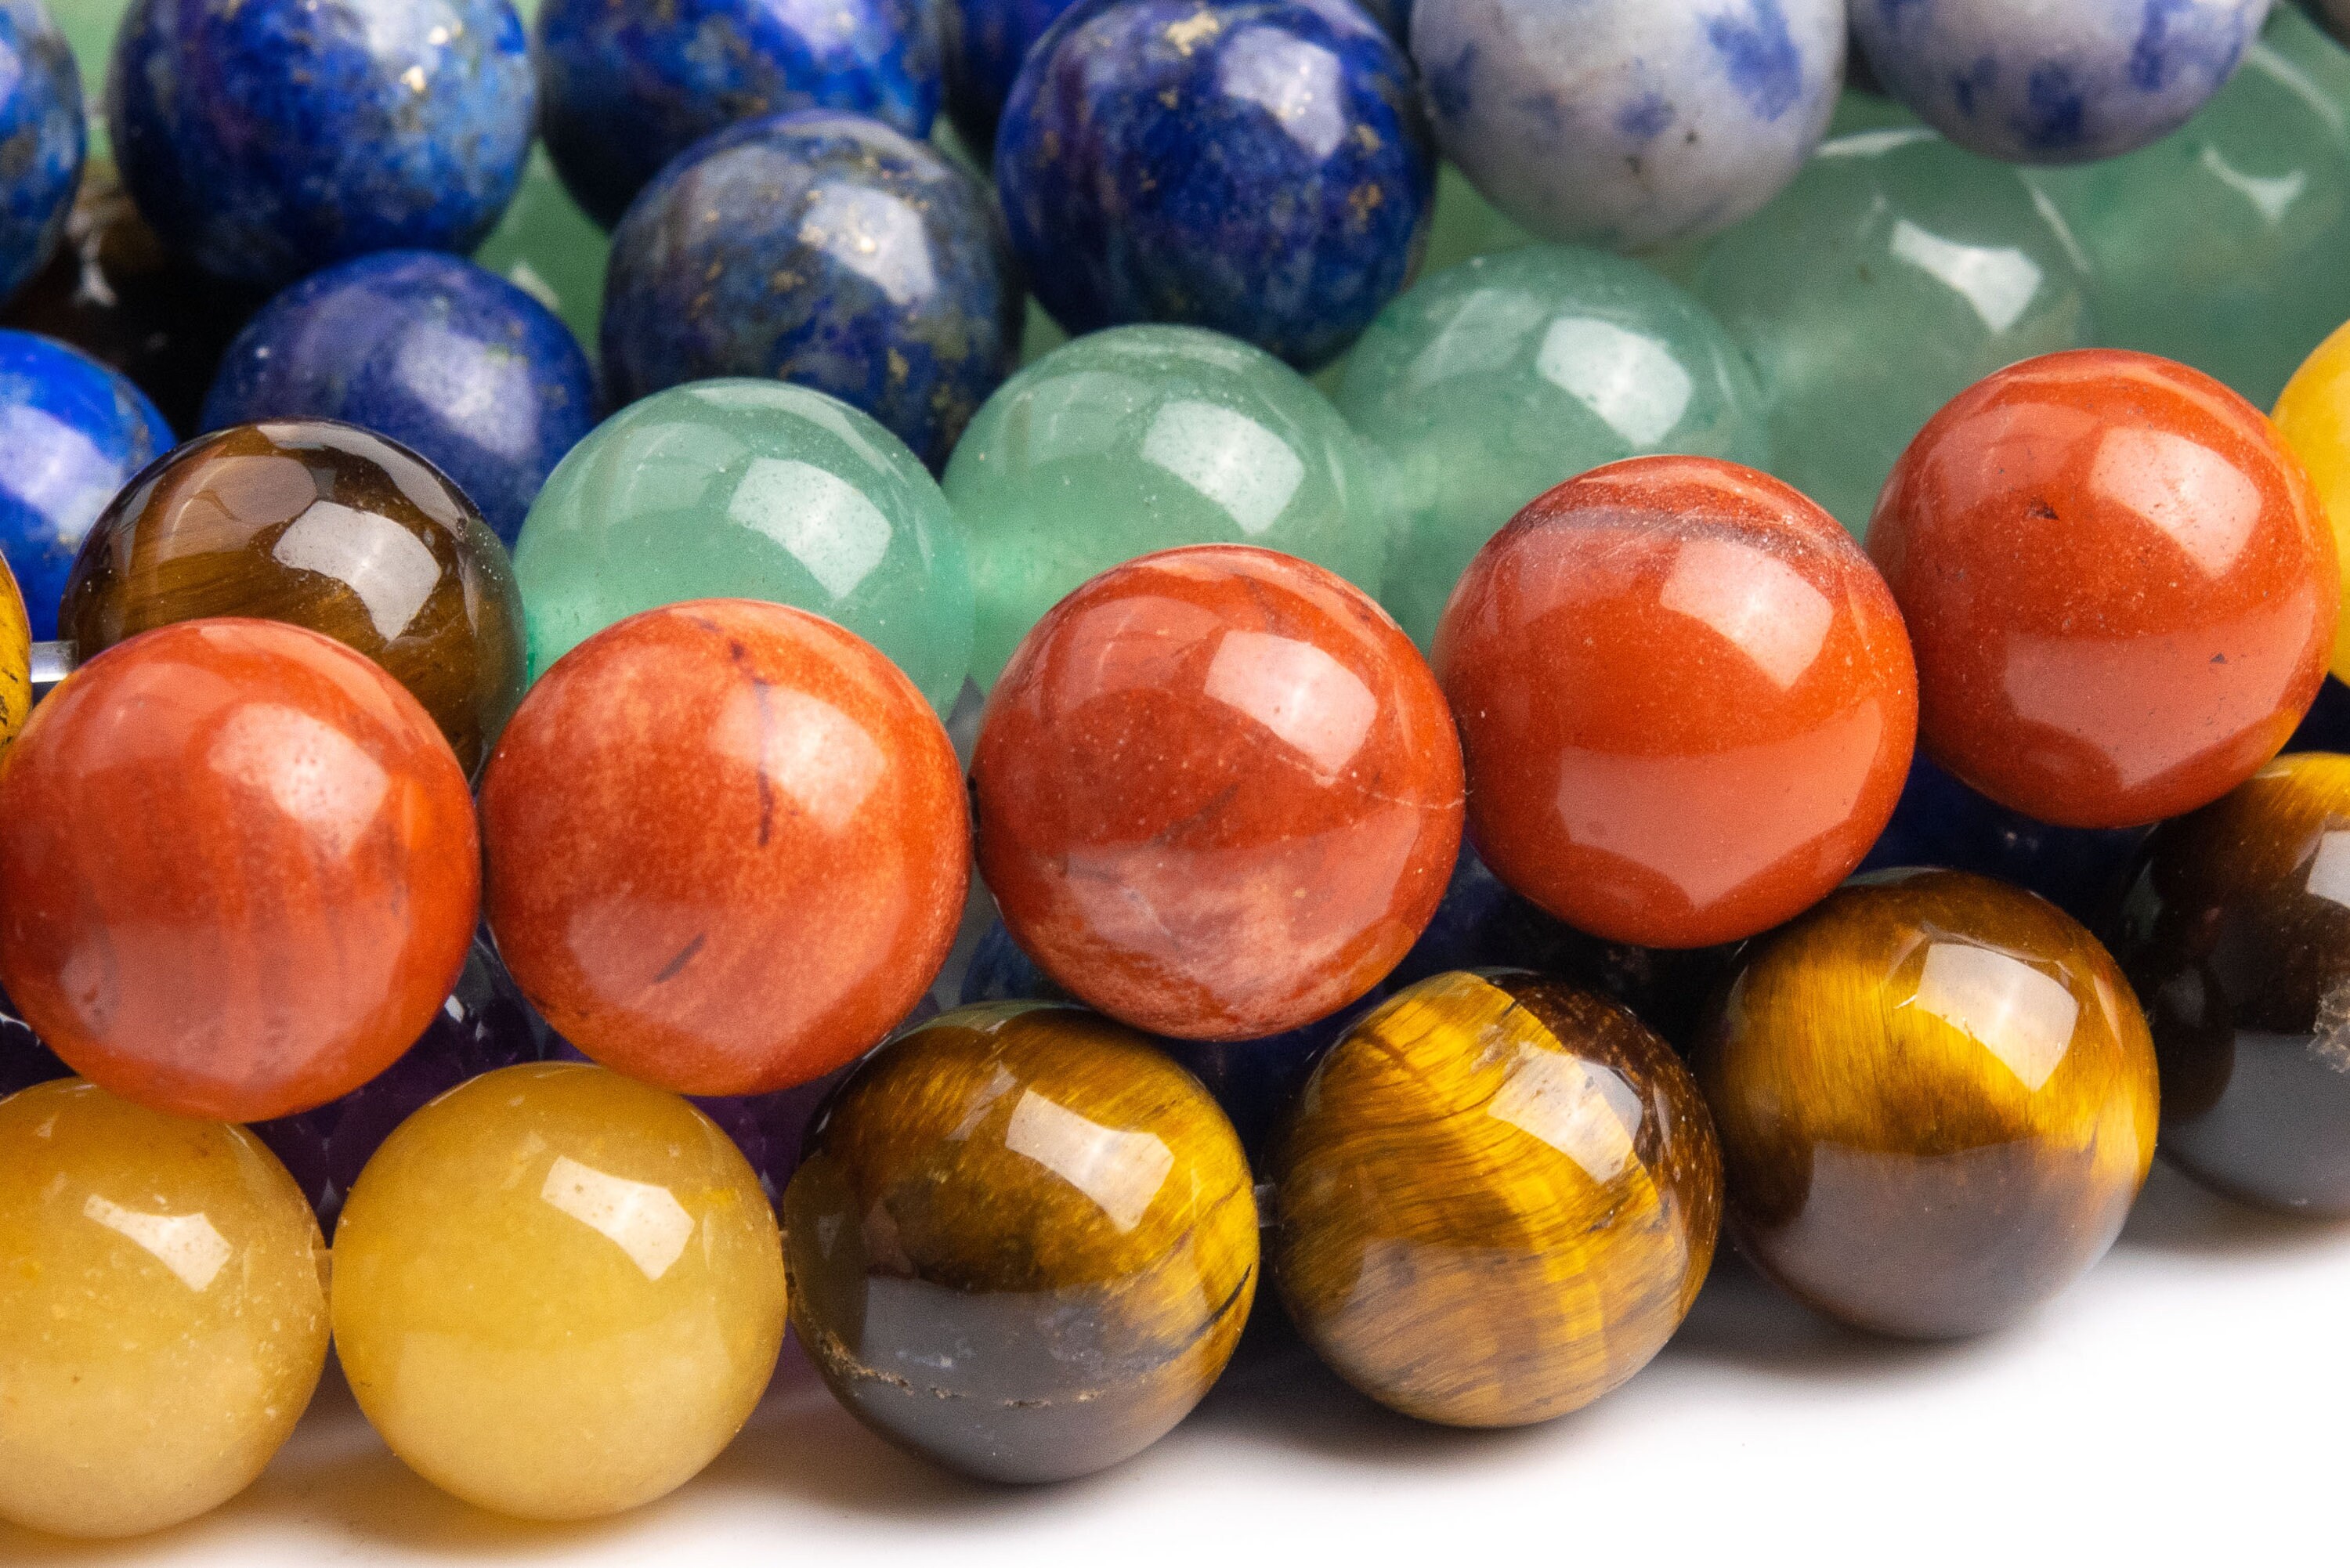 Large Hole Chakra Beads 8mm 10mm Round Seven Rainbow Gemstone